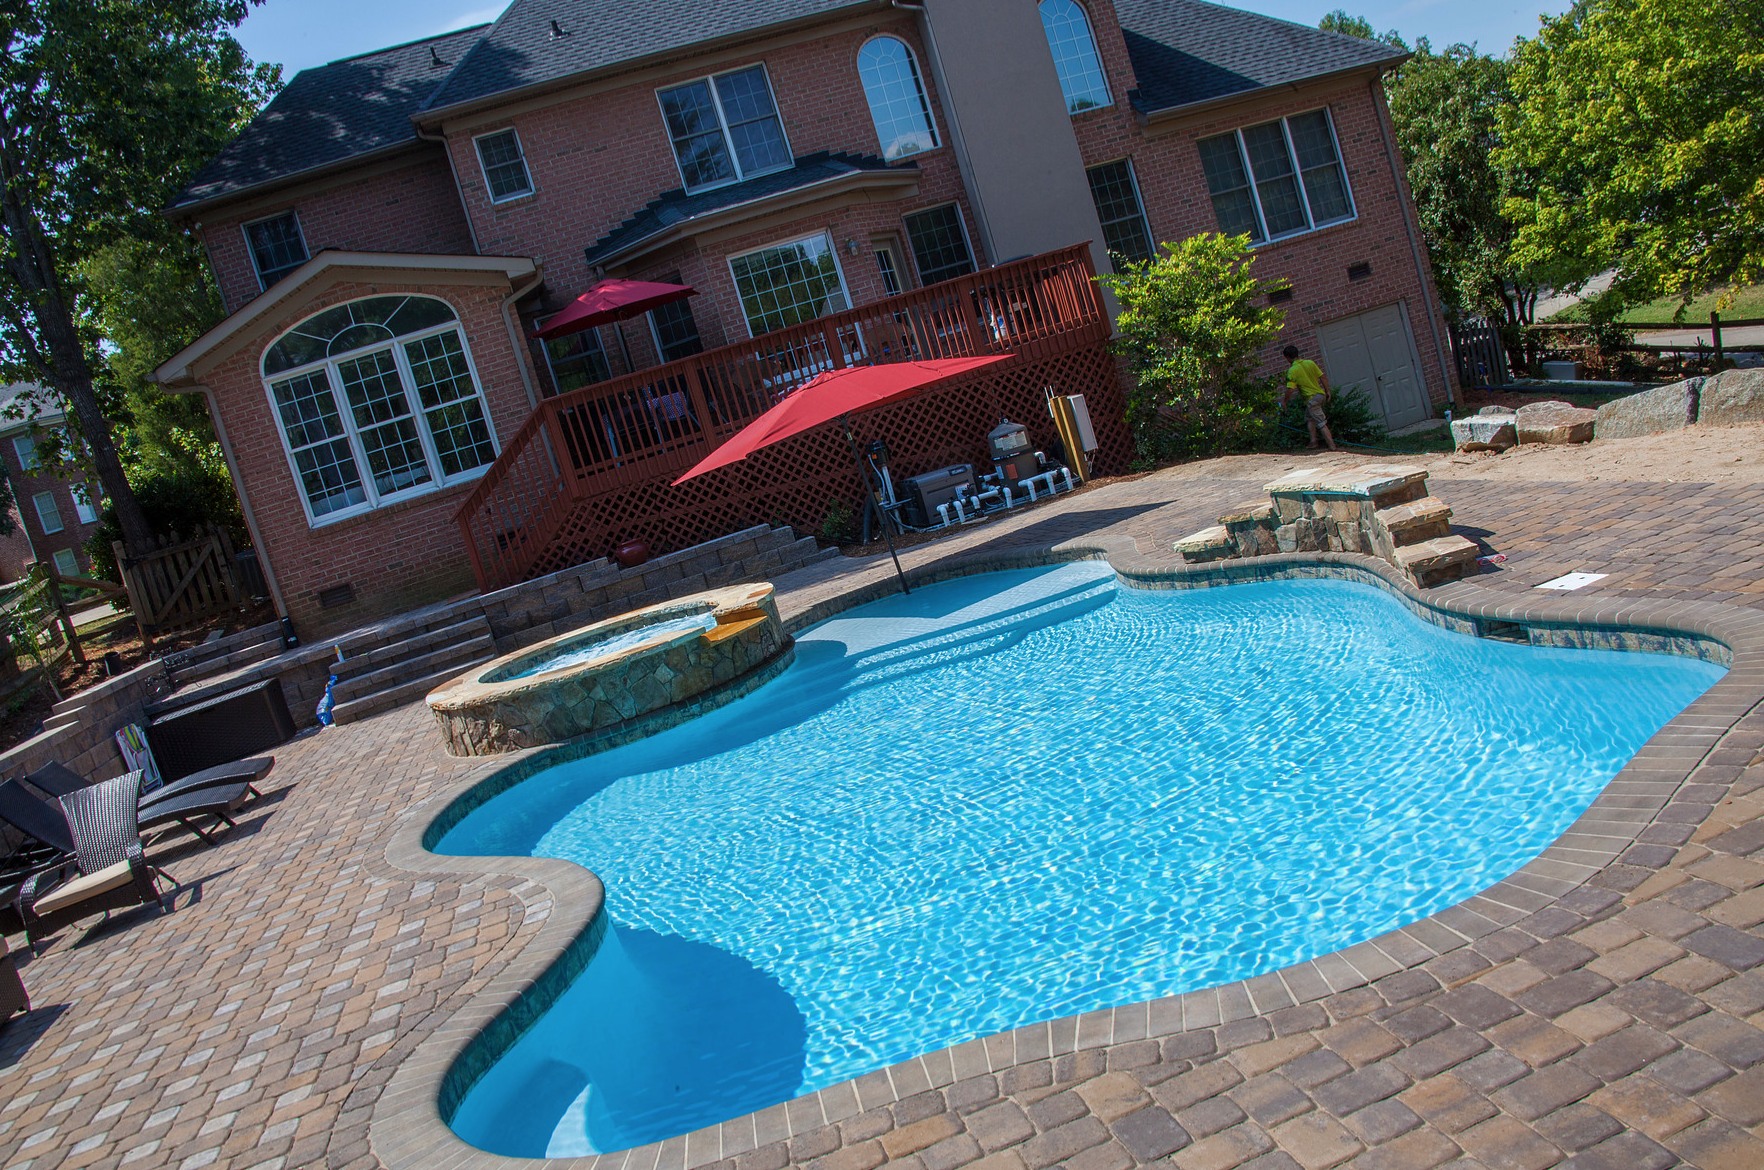 CPC Pools offers Custom Inground Concrete Pool Installation in Charlotte North Carolina 704-799-5236